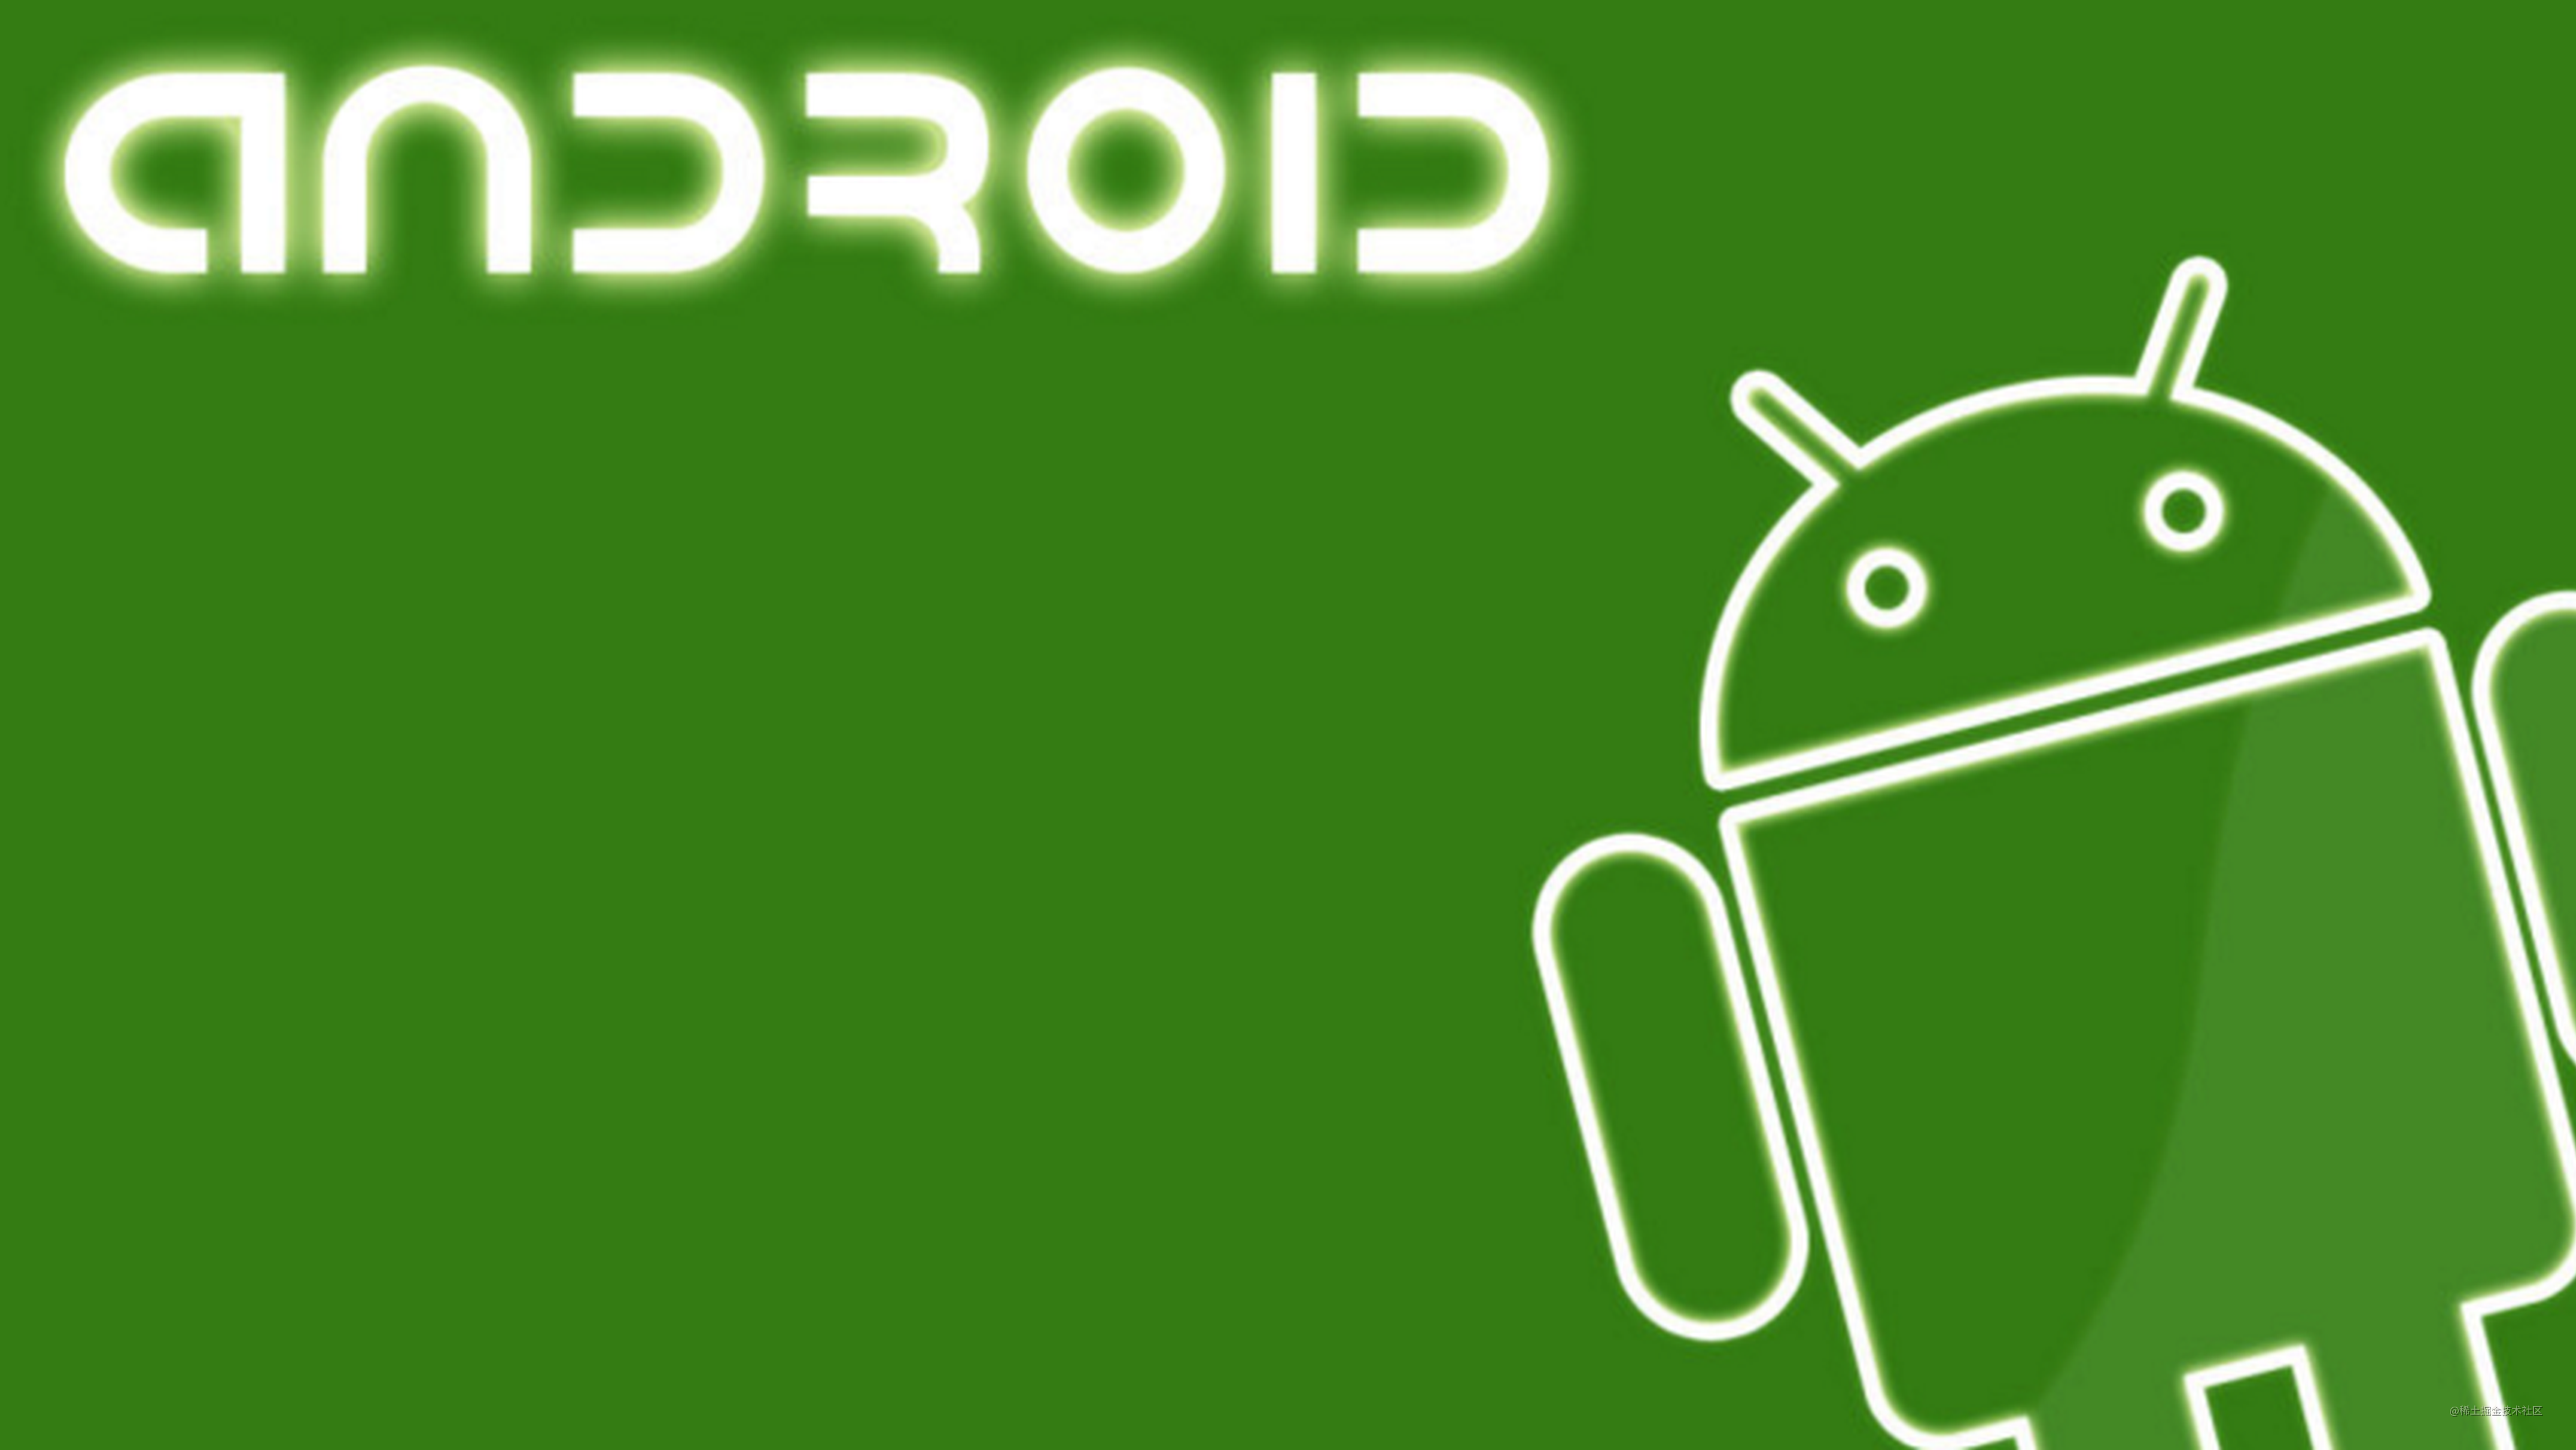 15 个 Android 通用流行框架大全